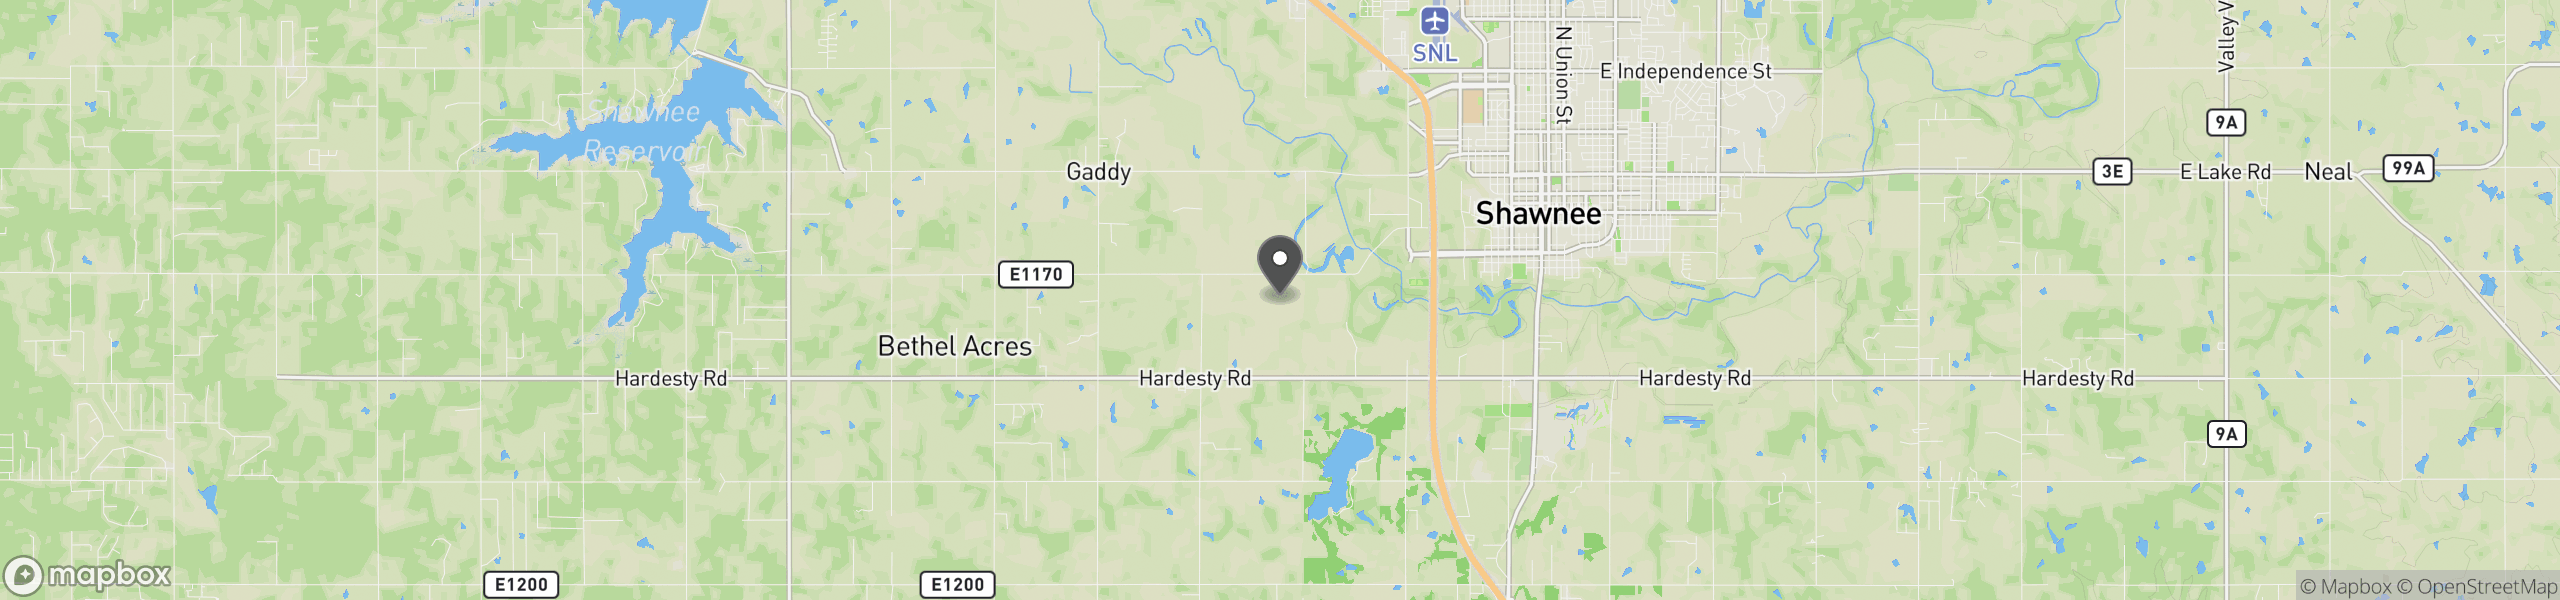 Shawnee, OK 74801